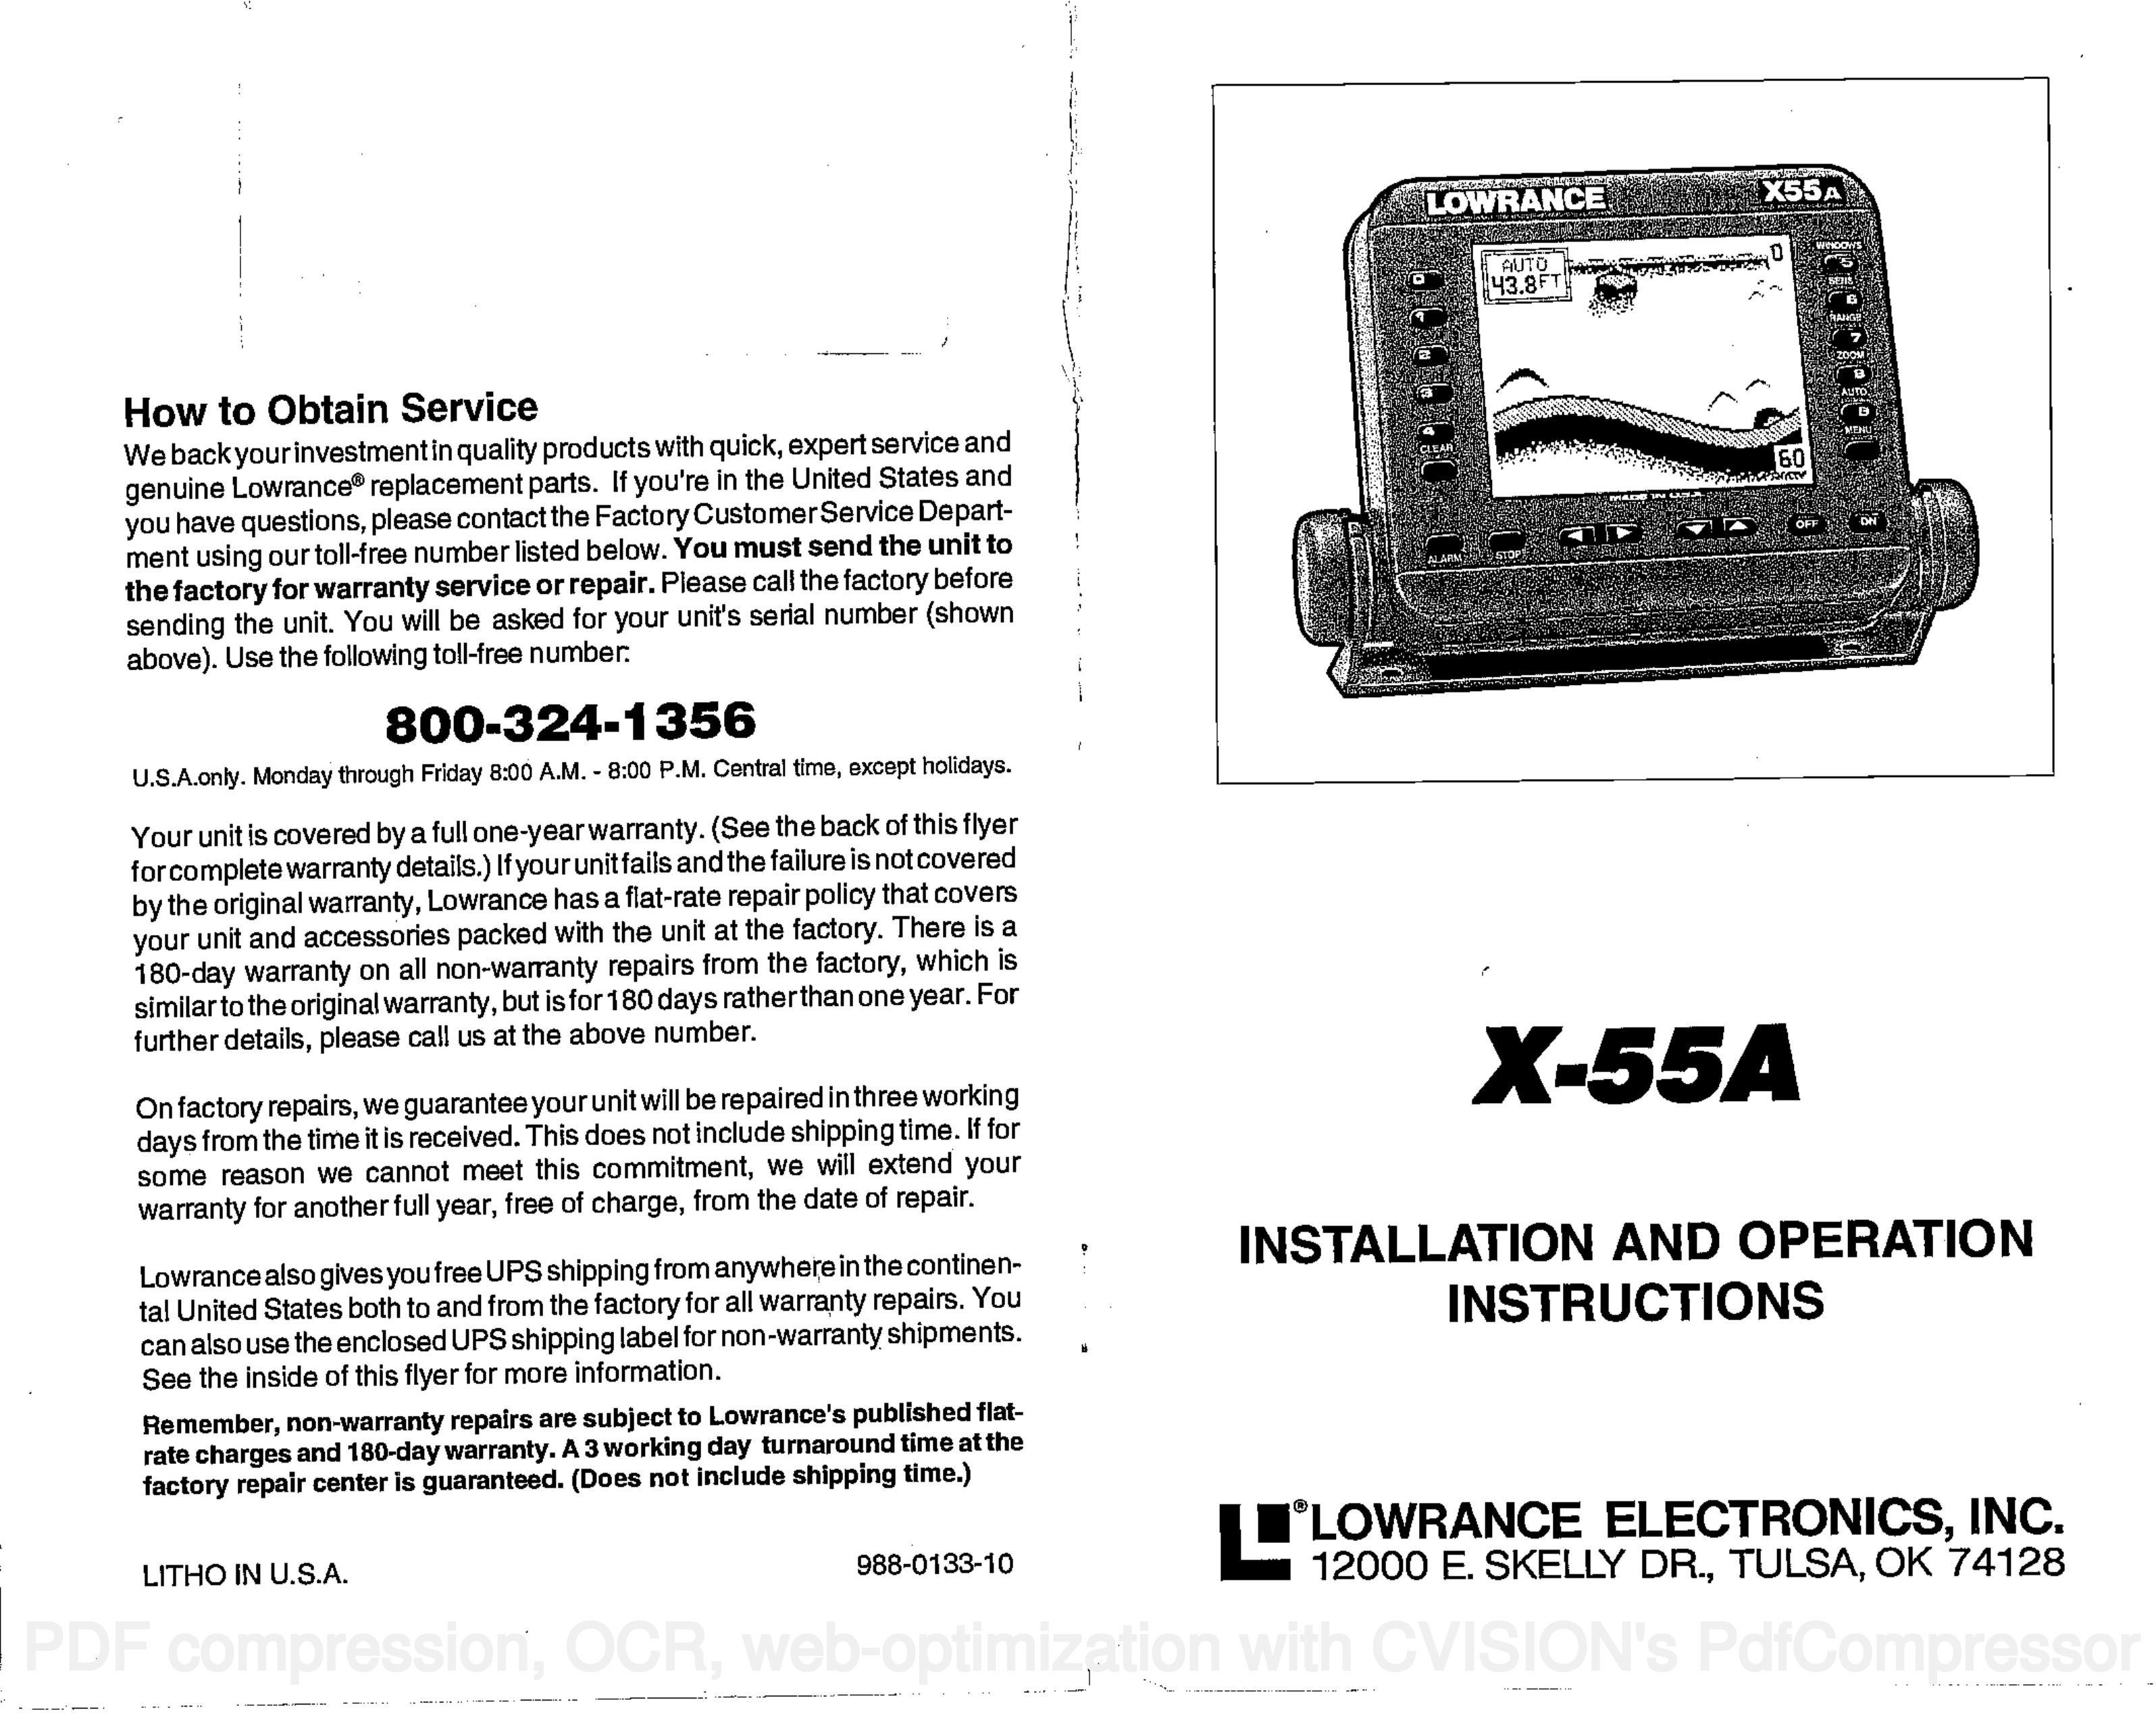 Lowrance electronic X-55A SONAR User Manual